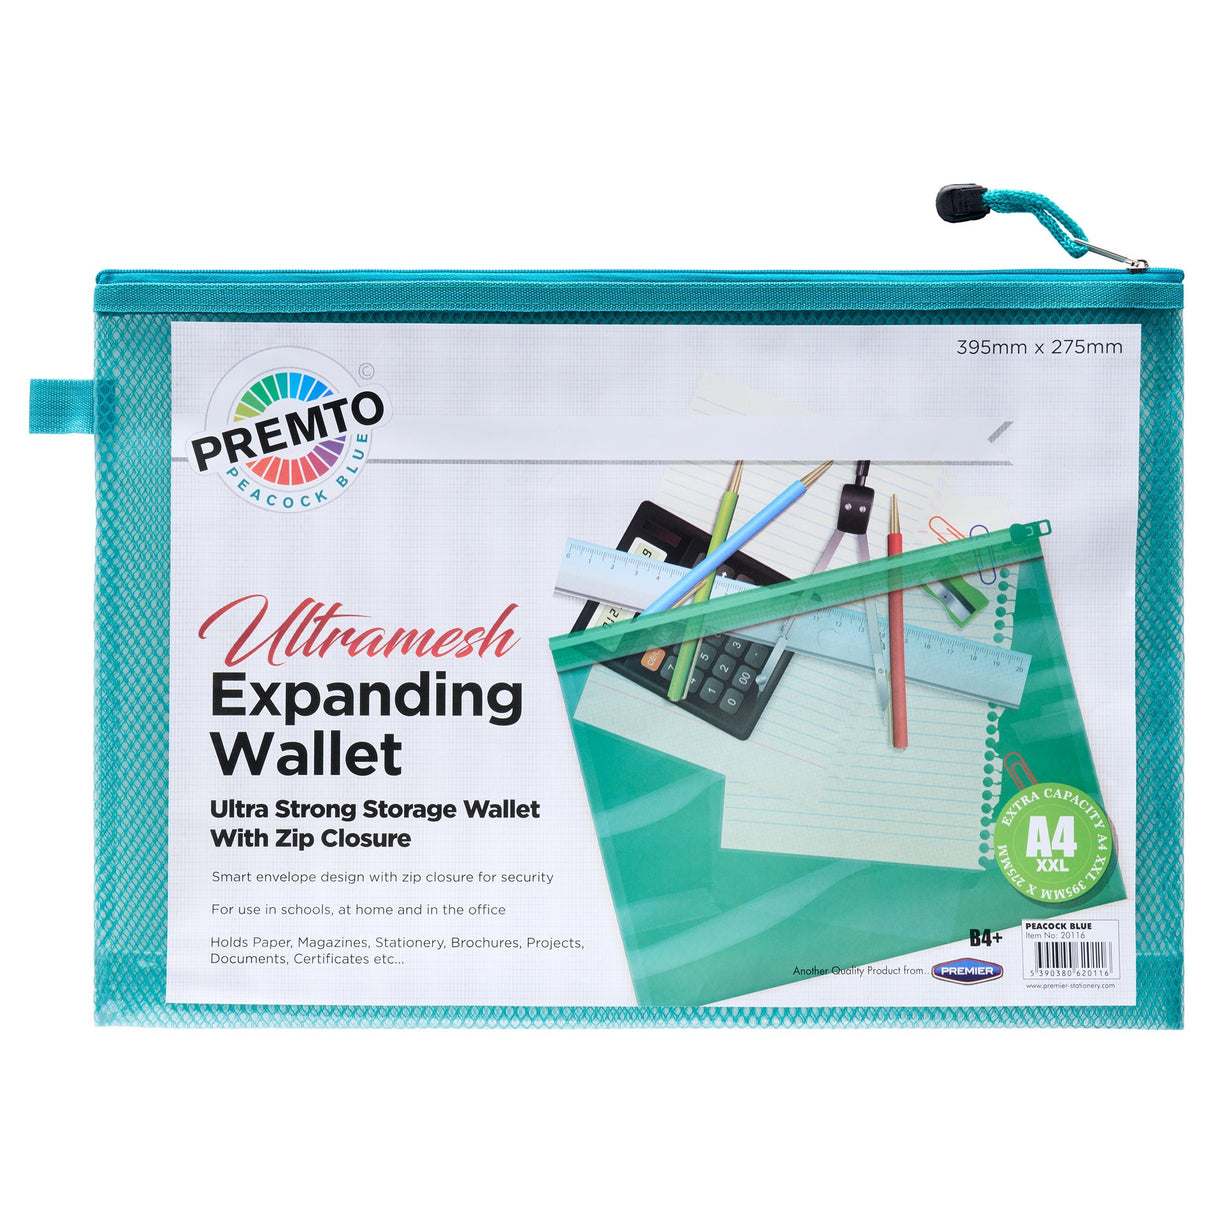 Premto B4+ Ultramesh Expanding Wallet with Zip - Peacock Blue-Mesh Wallet Bags-Premto|StationeryShop.co.uk